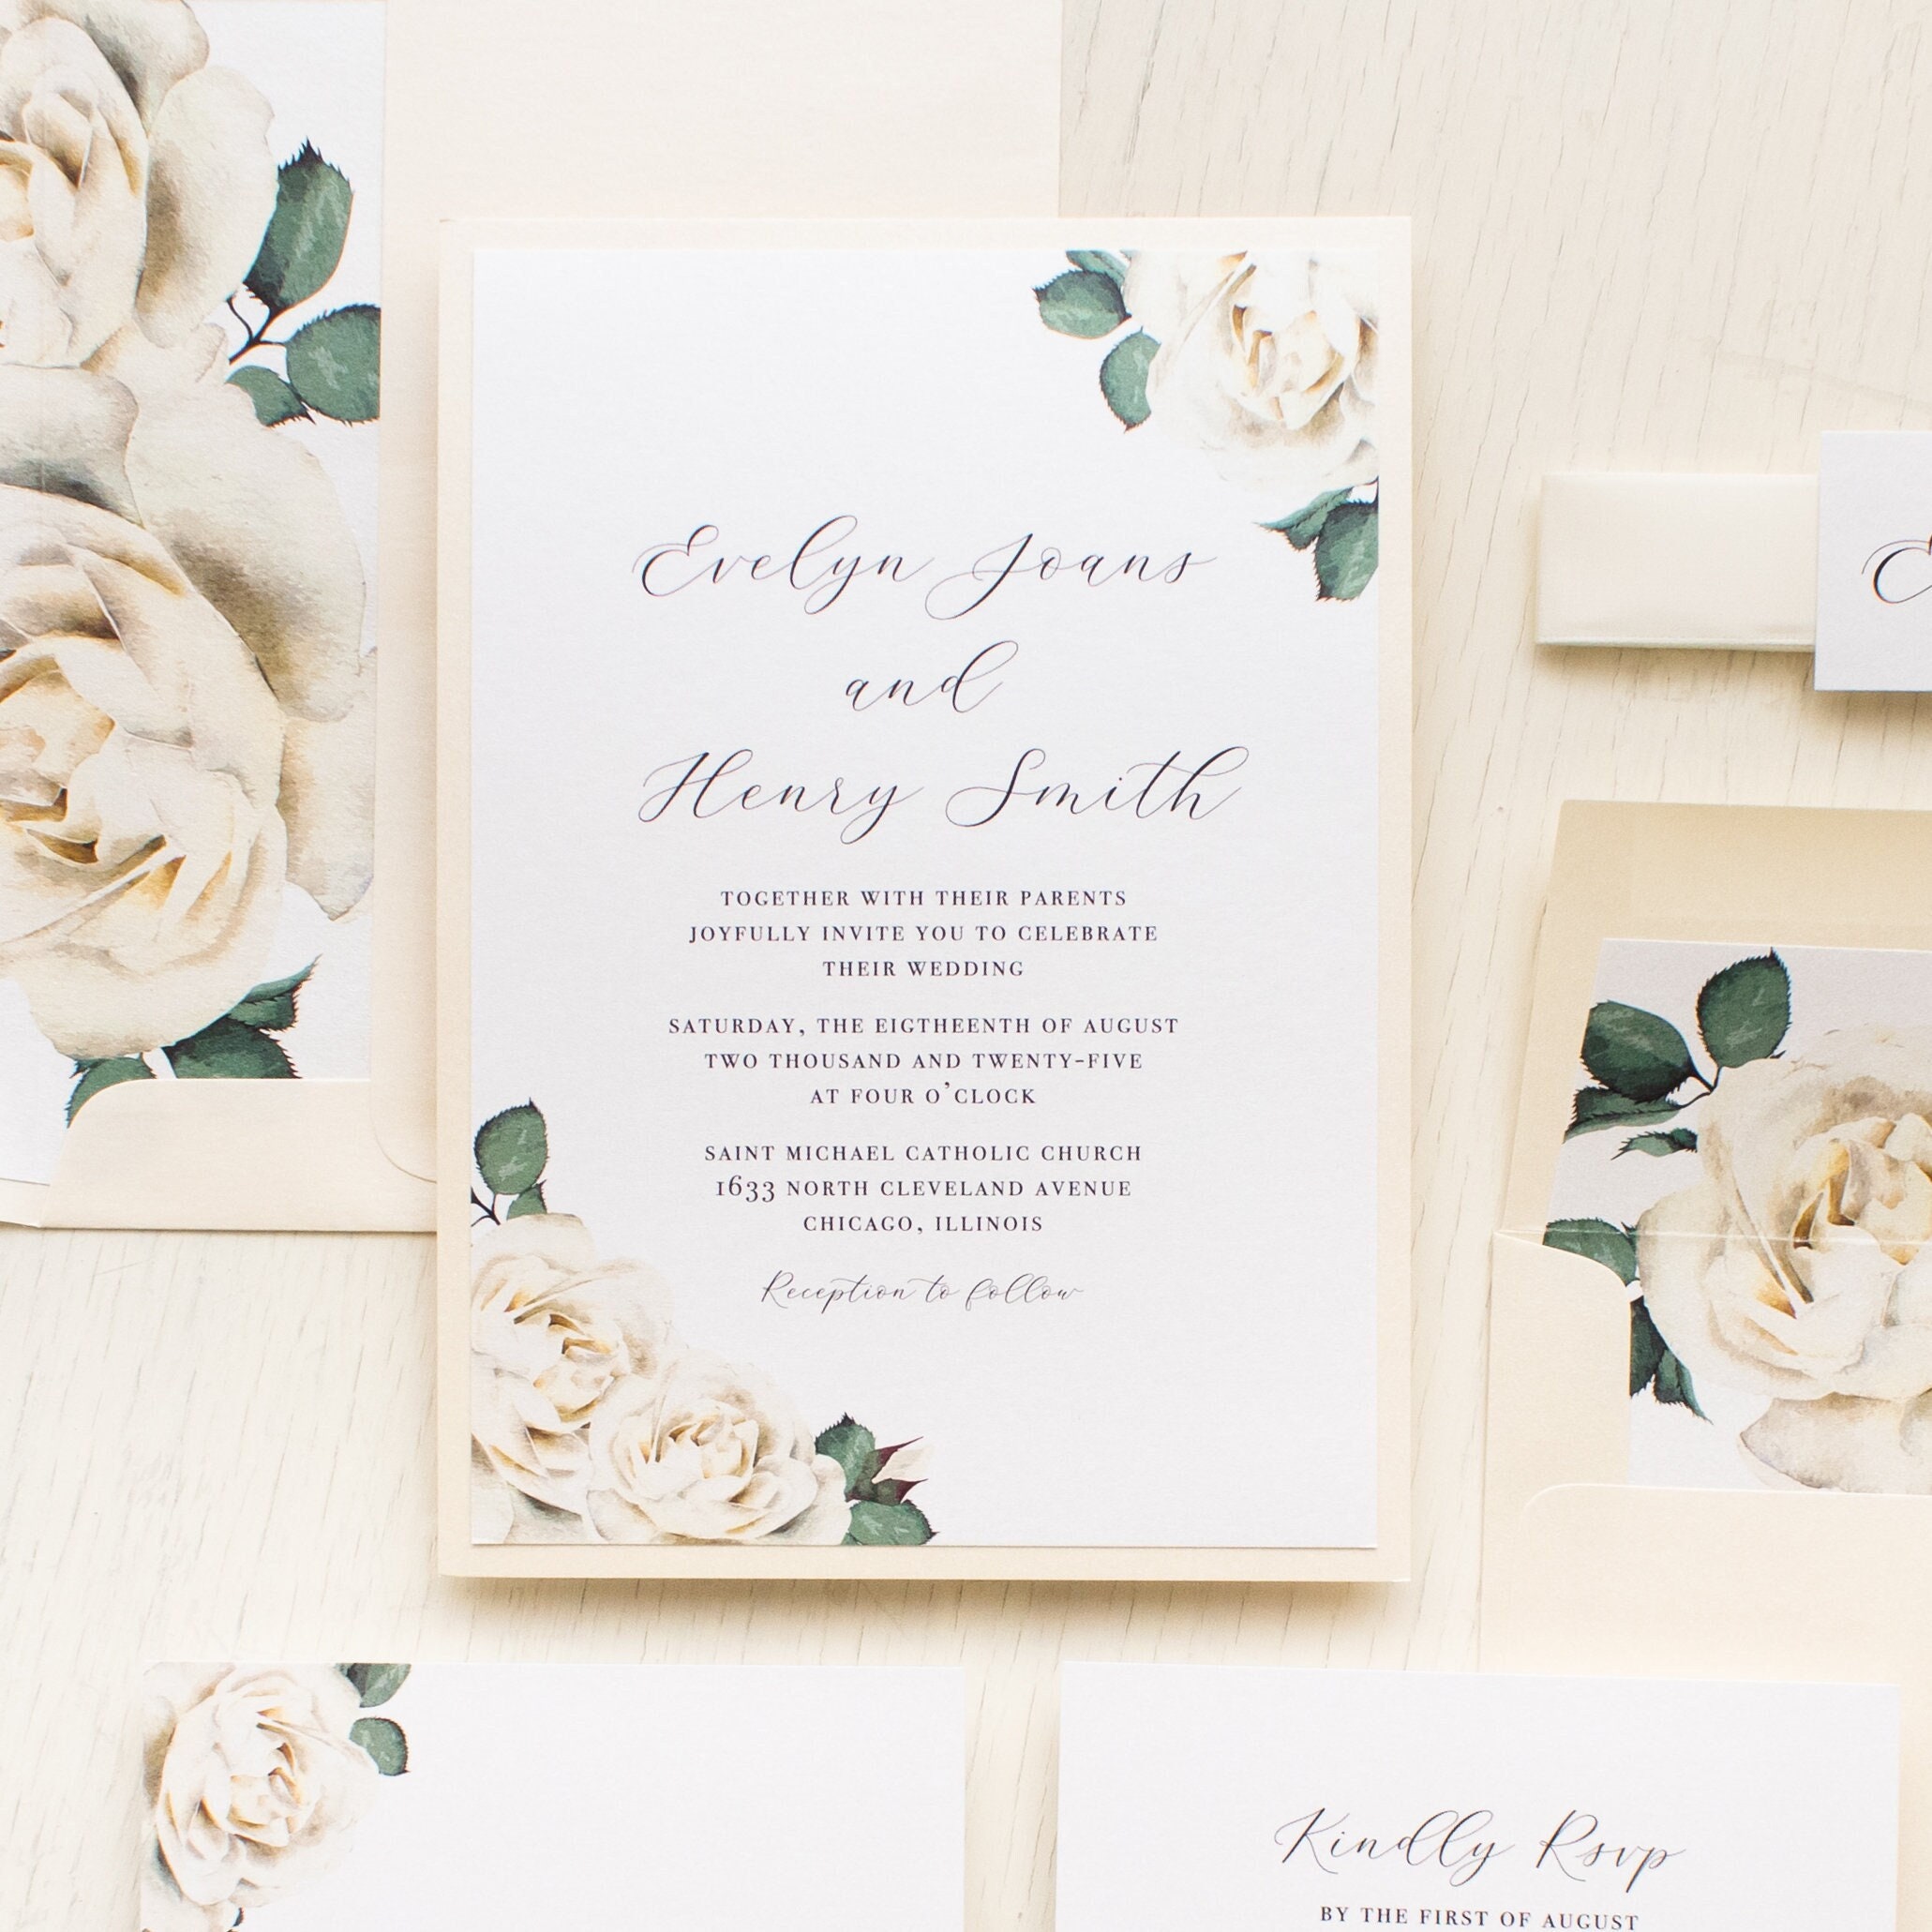 Vellum Wedding Invitations Floral, White Flower Wedding Invitations With  Vellum Wrap, Watercolor Greenery Wedding Invitation Suite Printed 